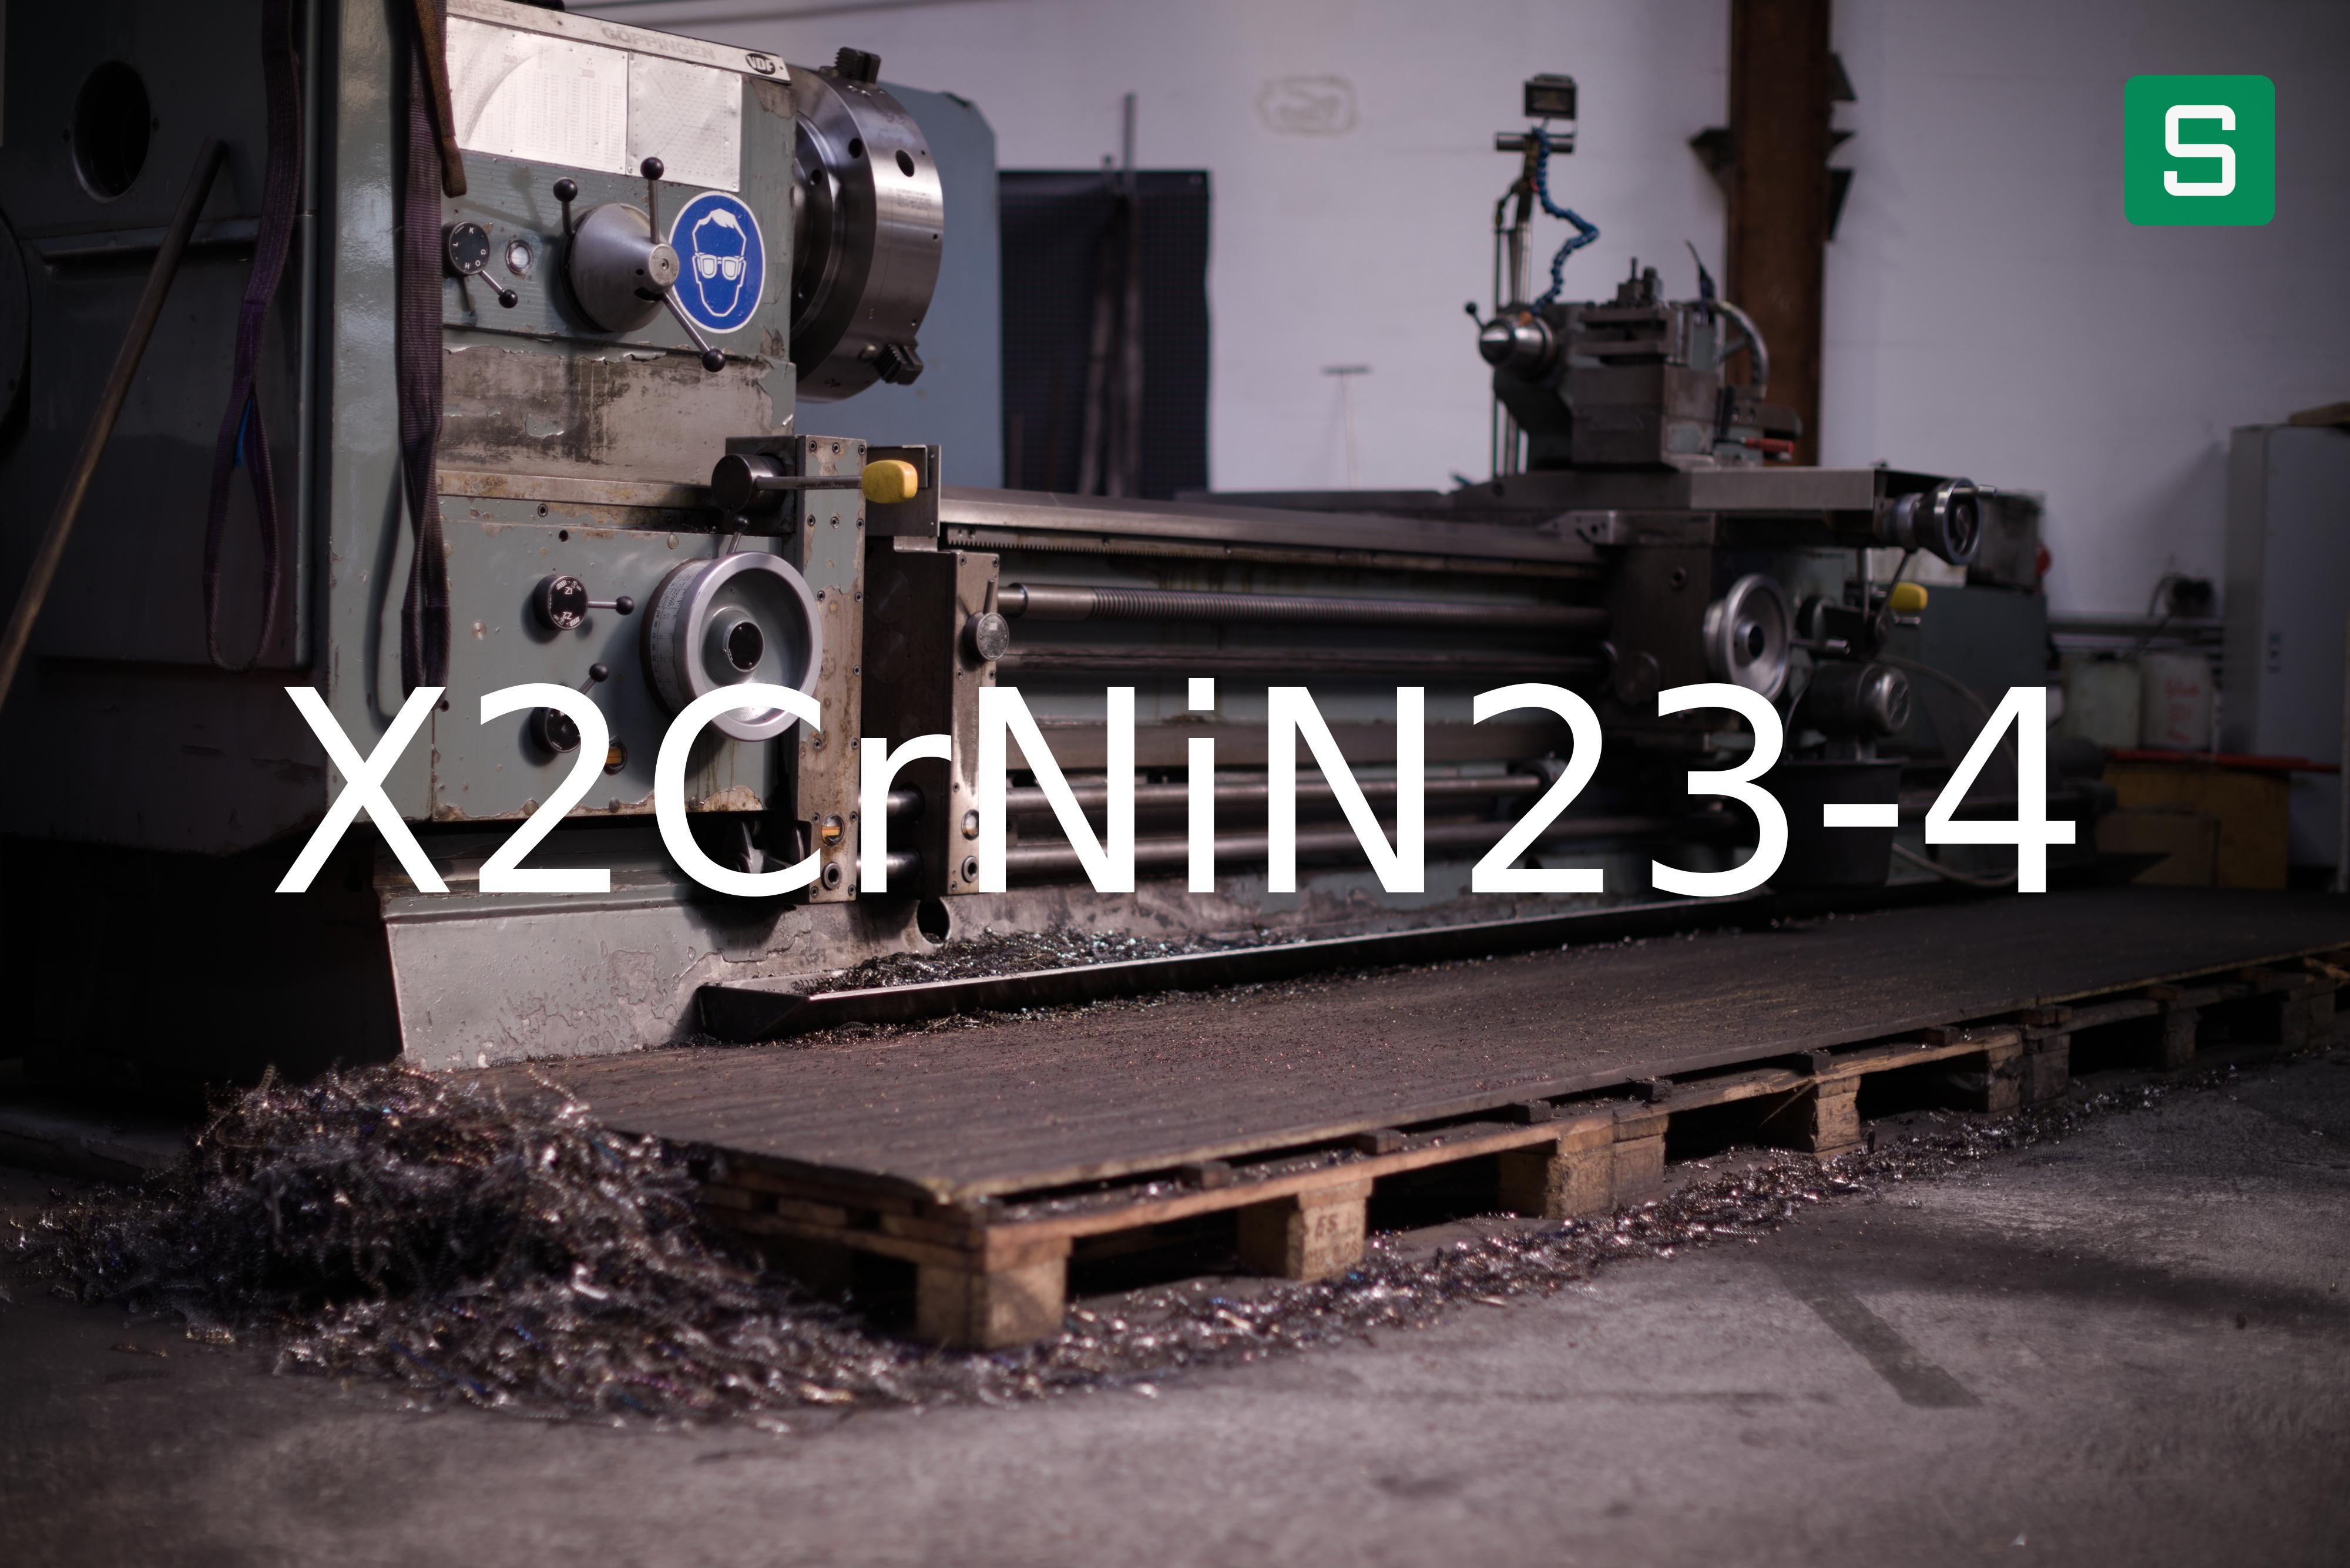 Steel Material: X2CrNiN23-4